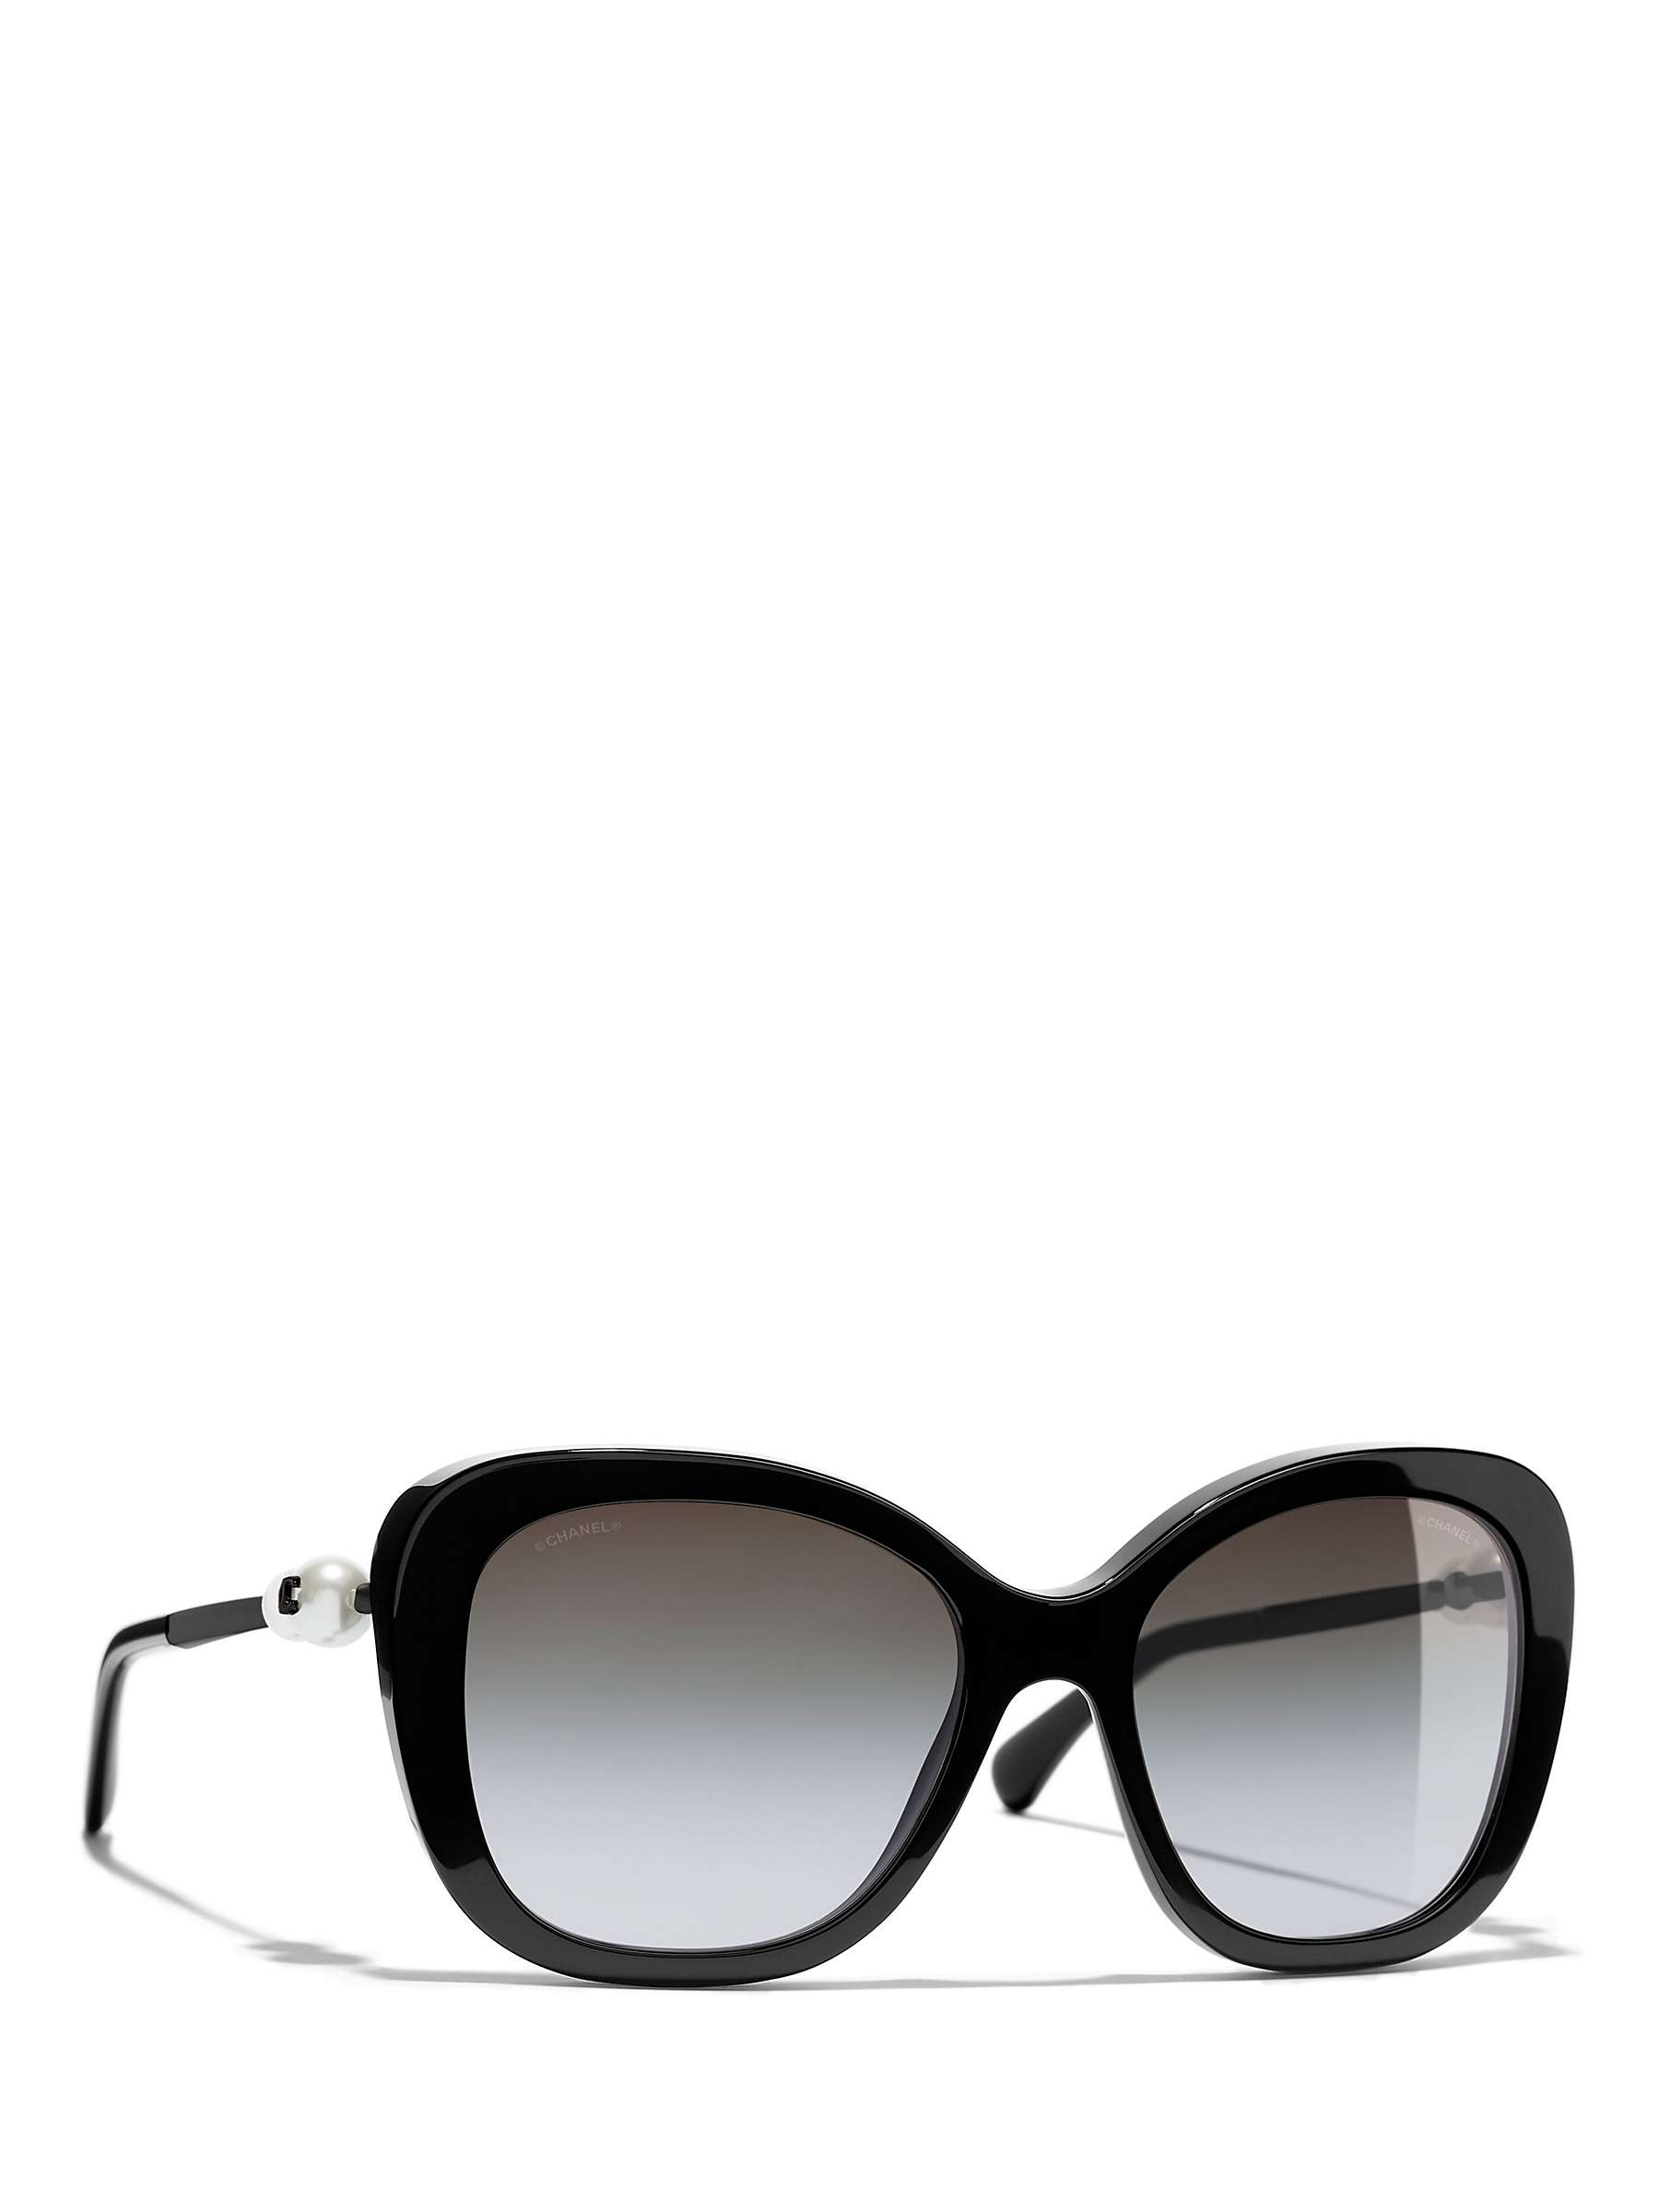 Buy Chanel Square Sunglasses CH5339H, Black/Grey Gradient Online at johnlewis.com